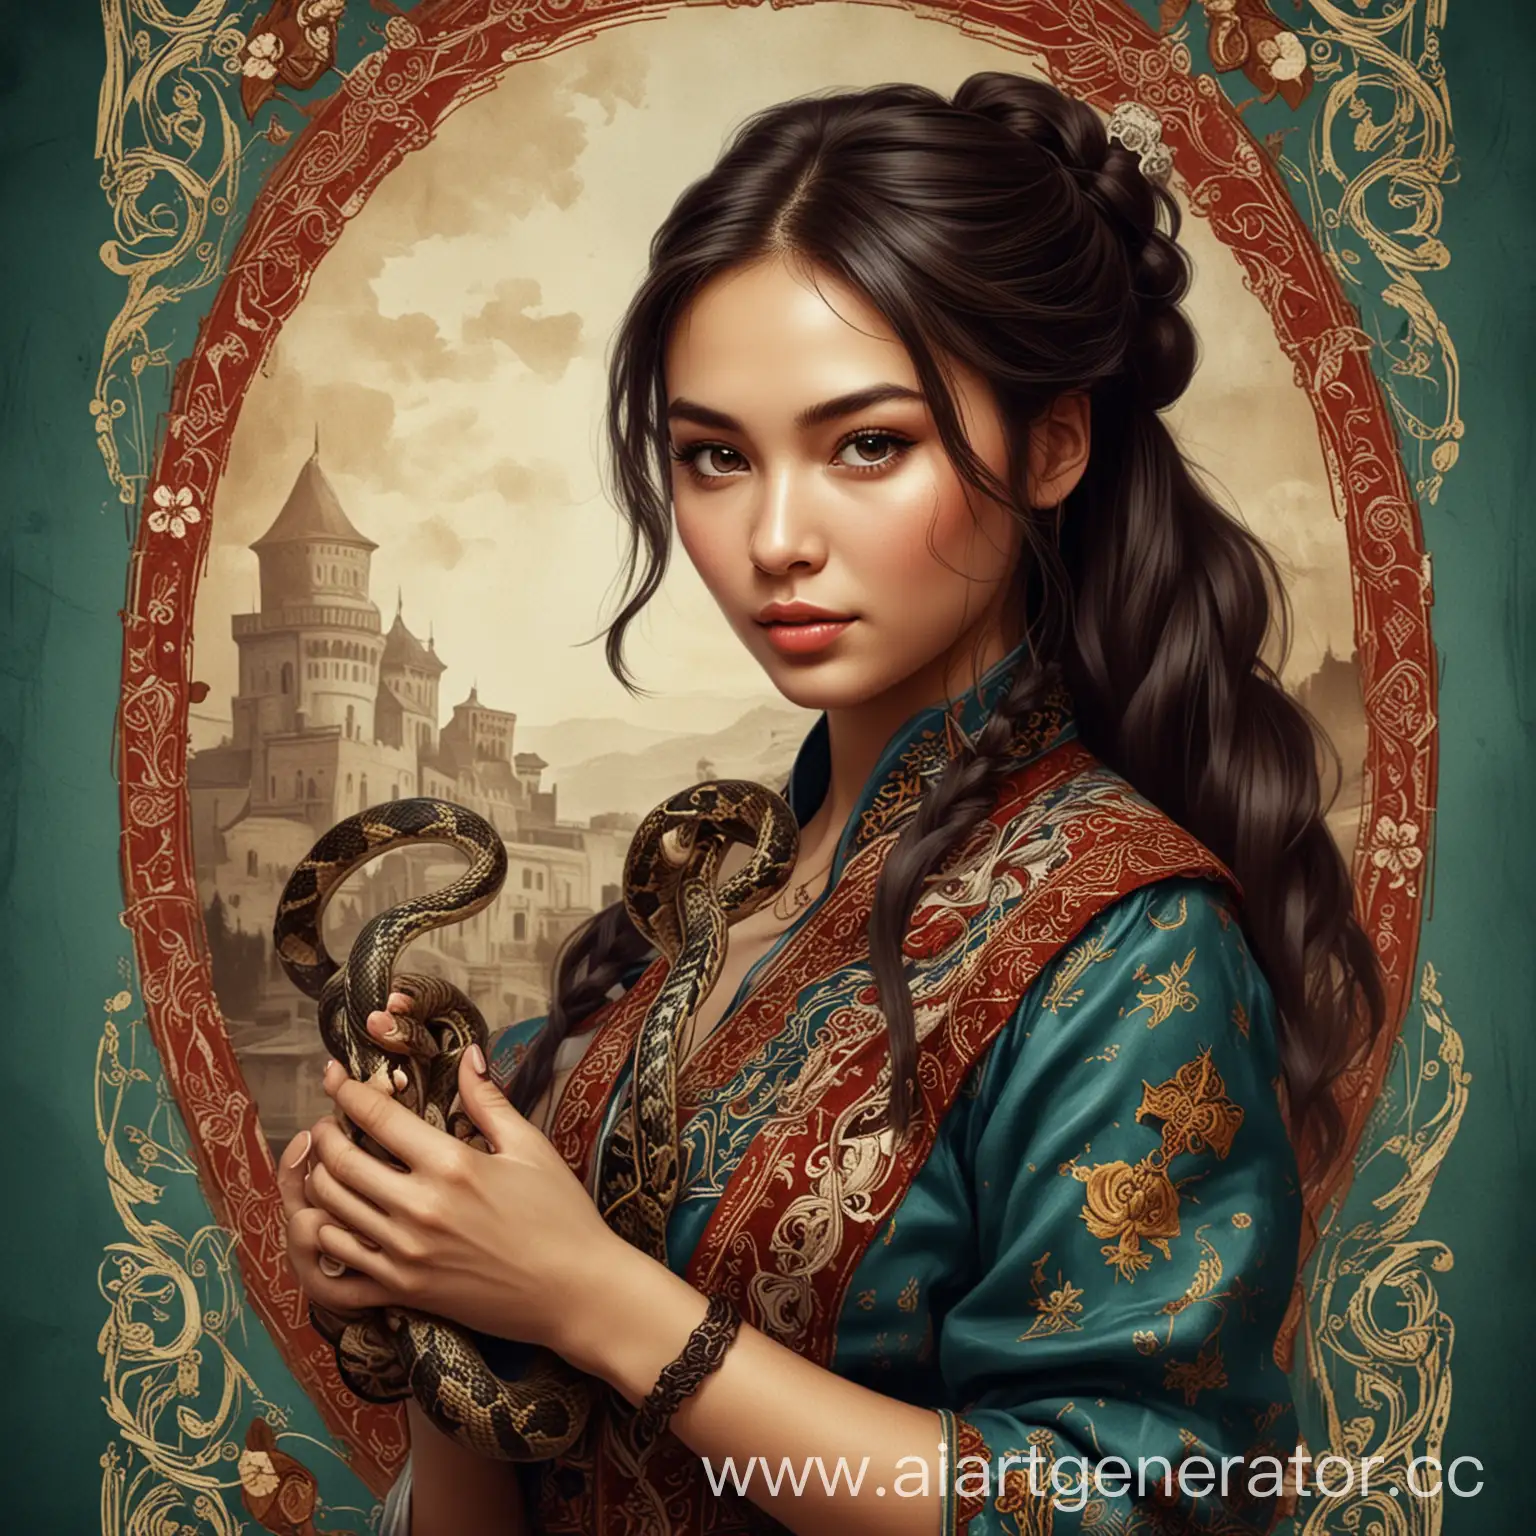 Kazakh-Girl-Holding-Snake-Playing-Card-Club-of-Romantics-Style